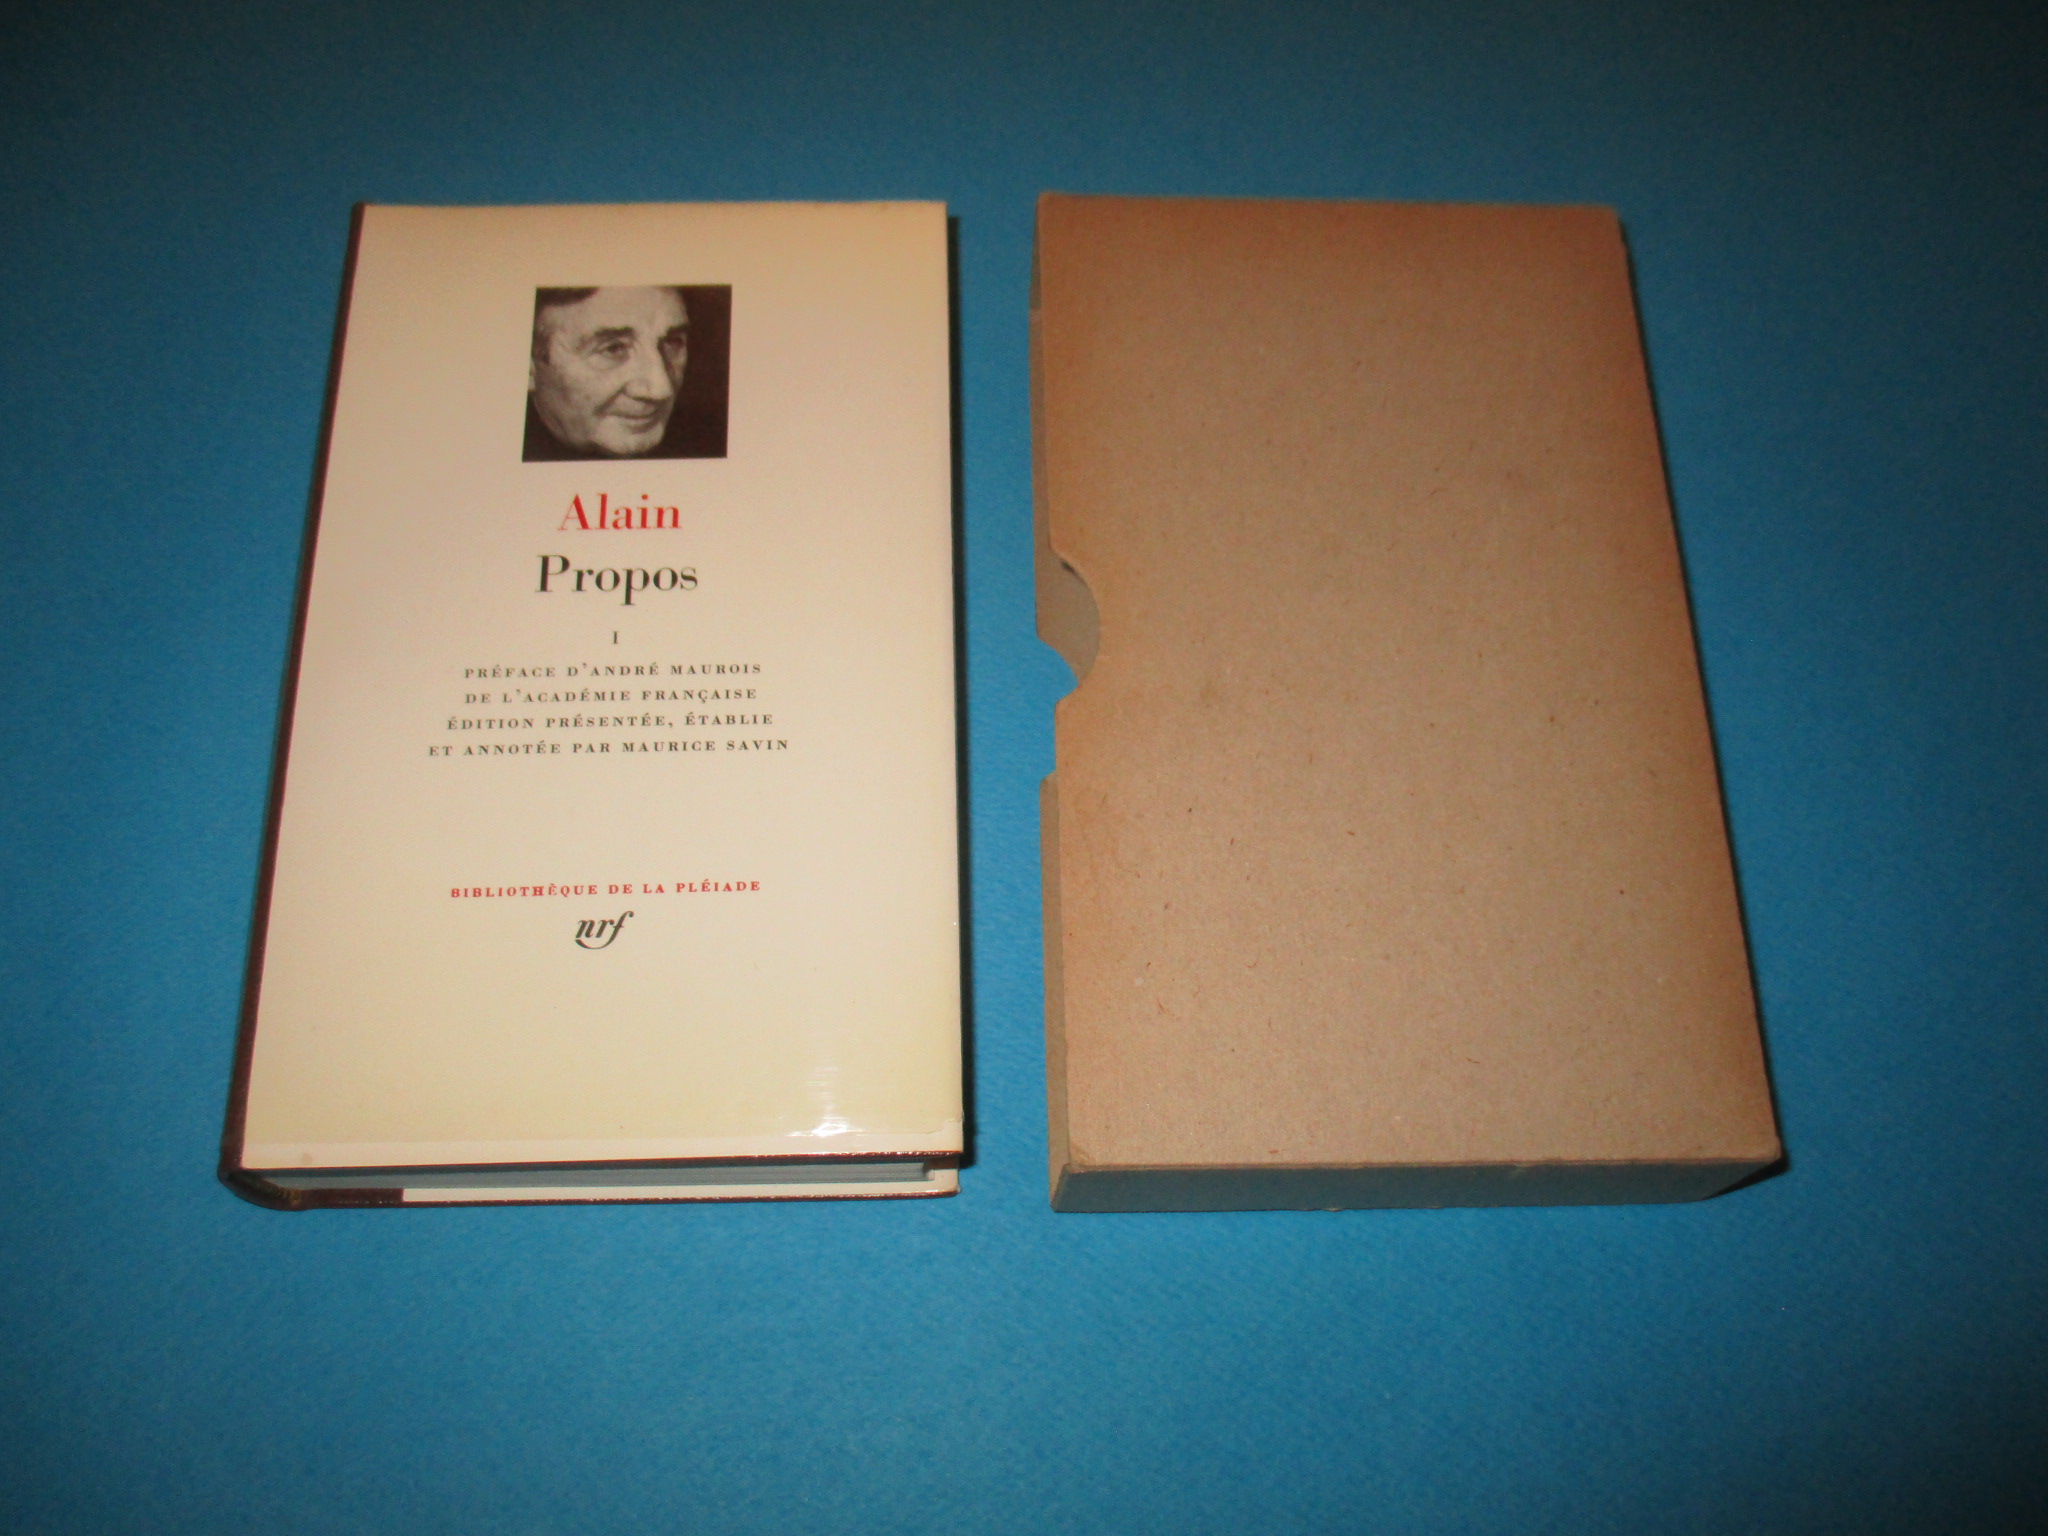 Propos I, Alain, tome 1, La Pléiade 1969